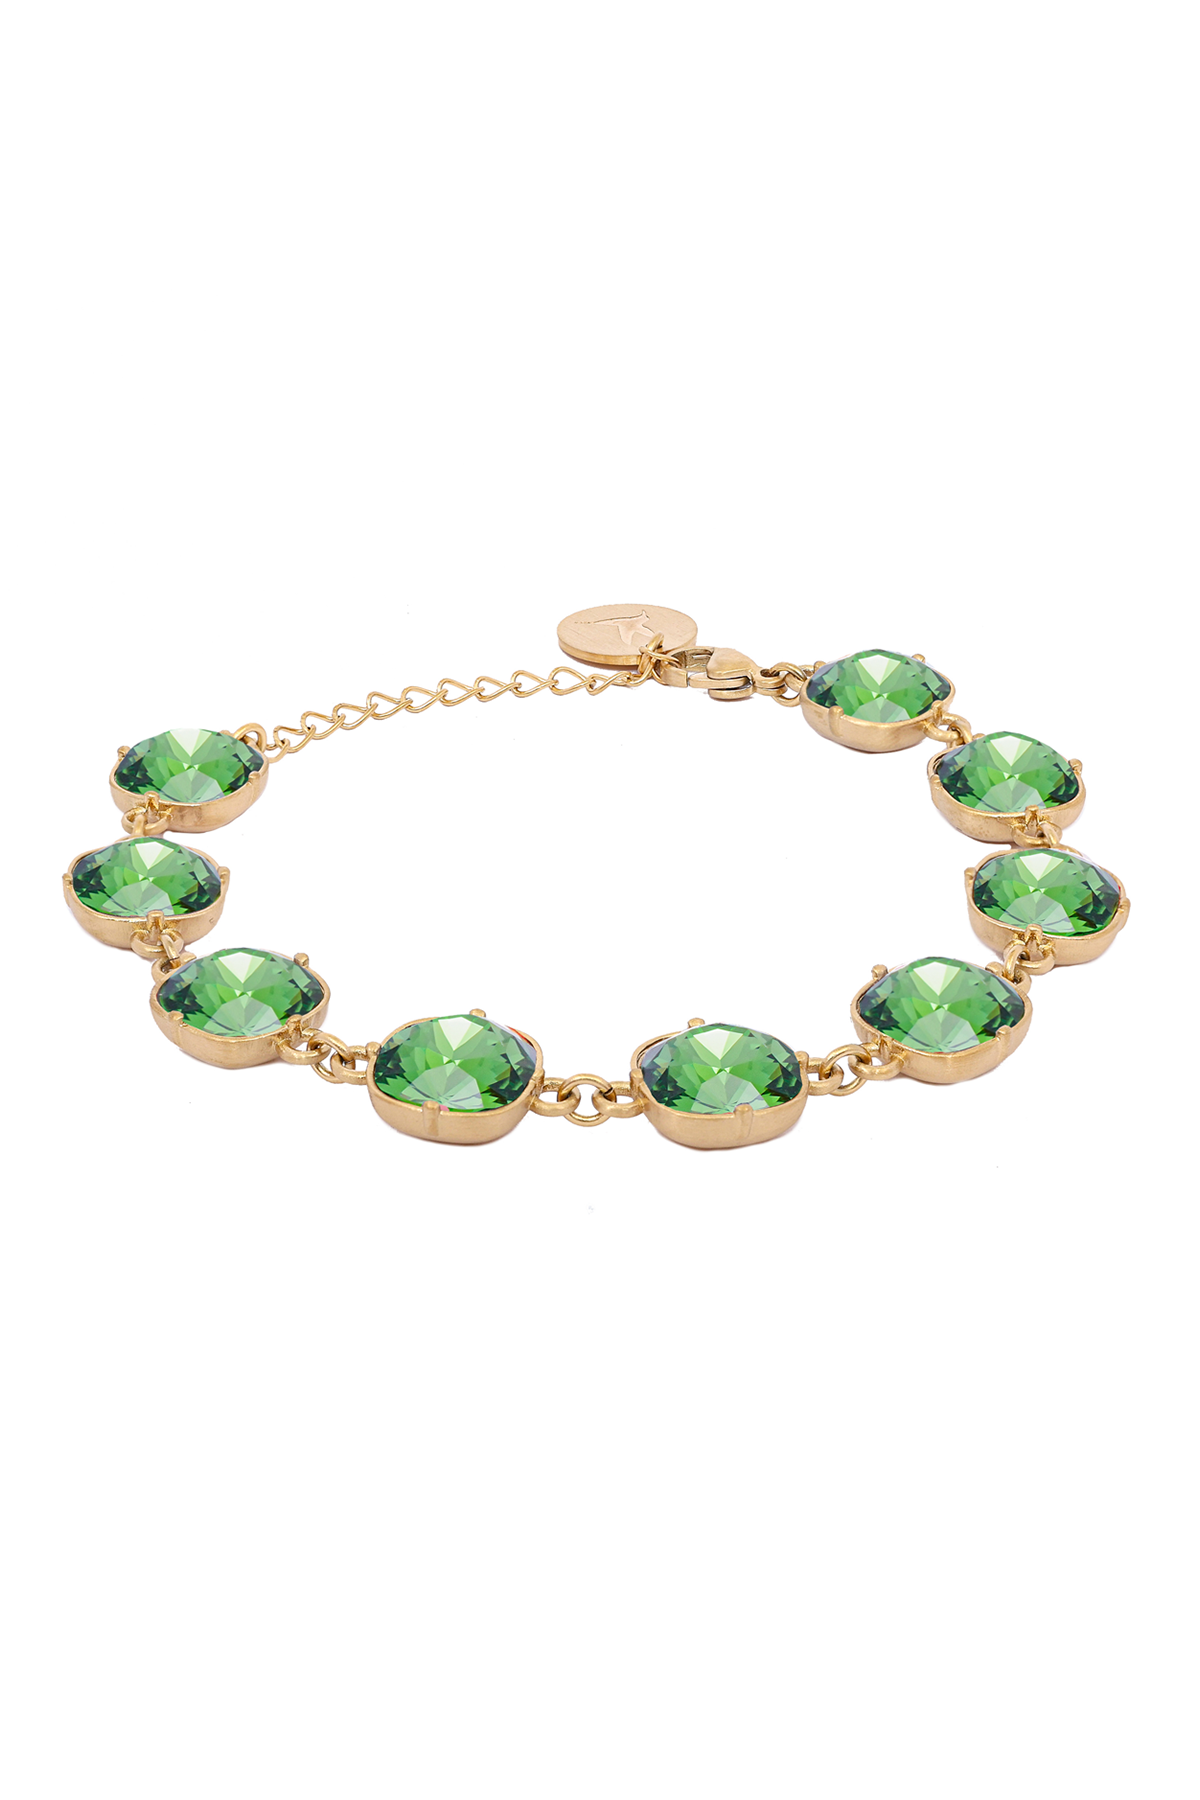 Carla Swarovski lux bracelet - Dark moss